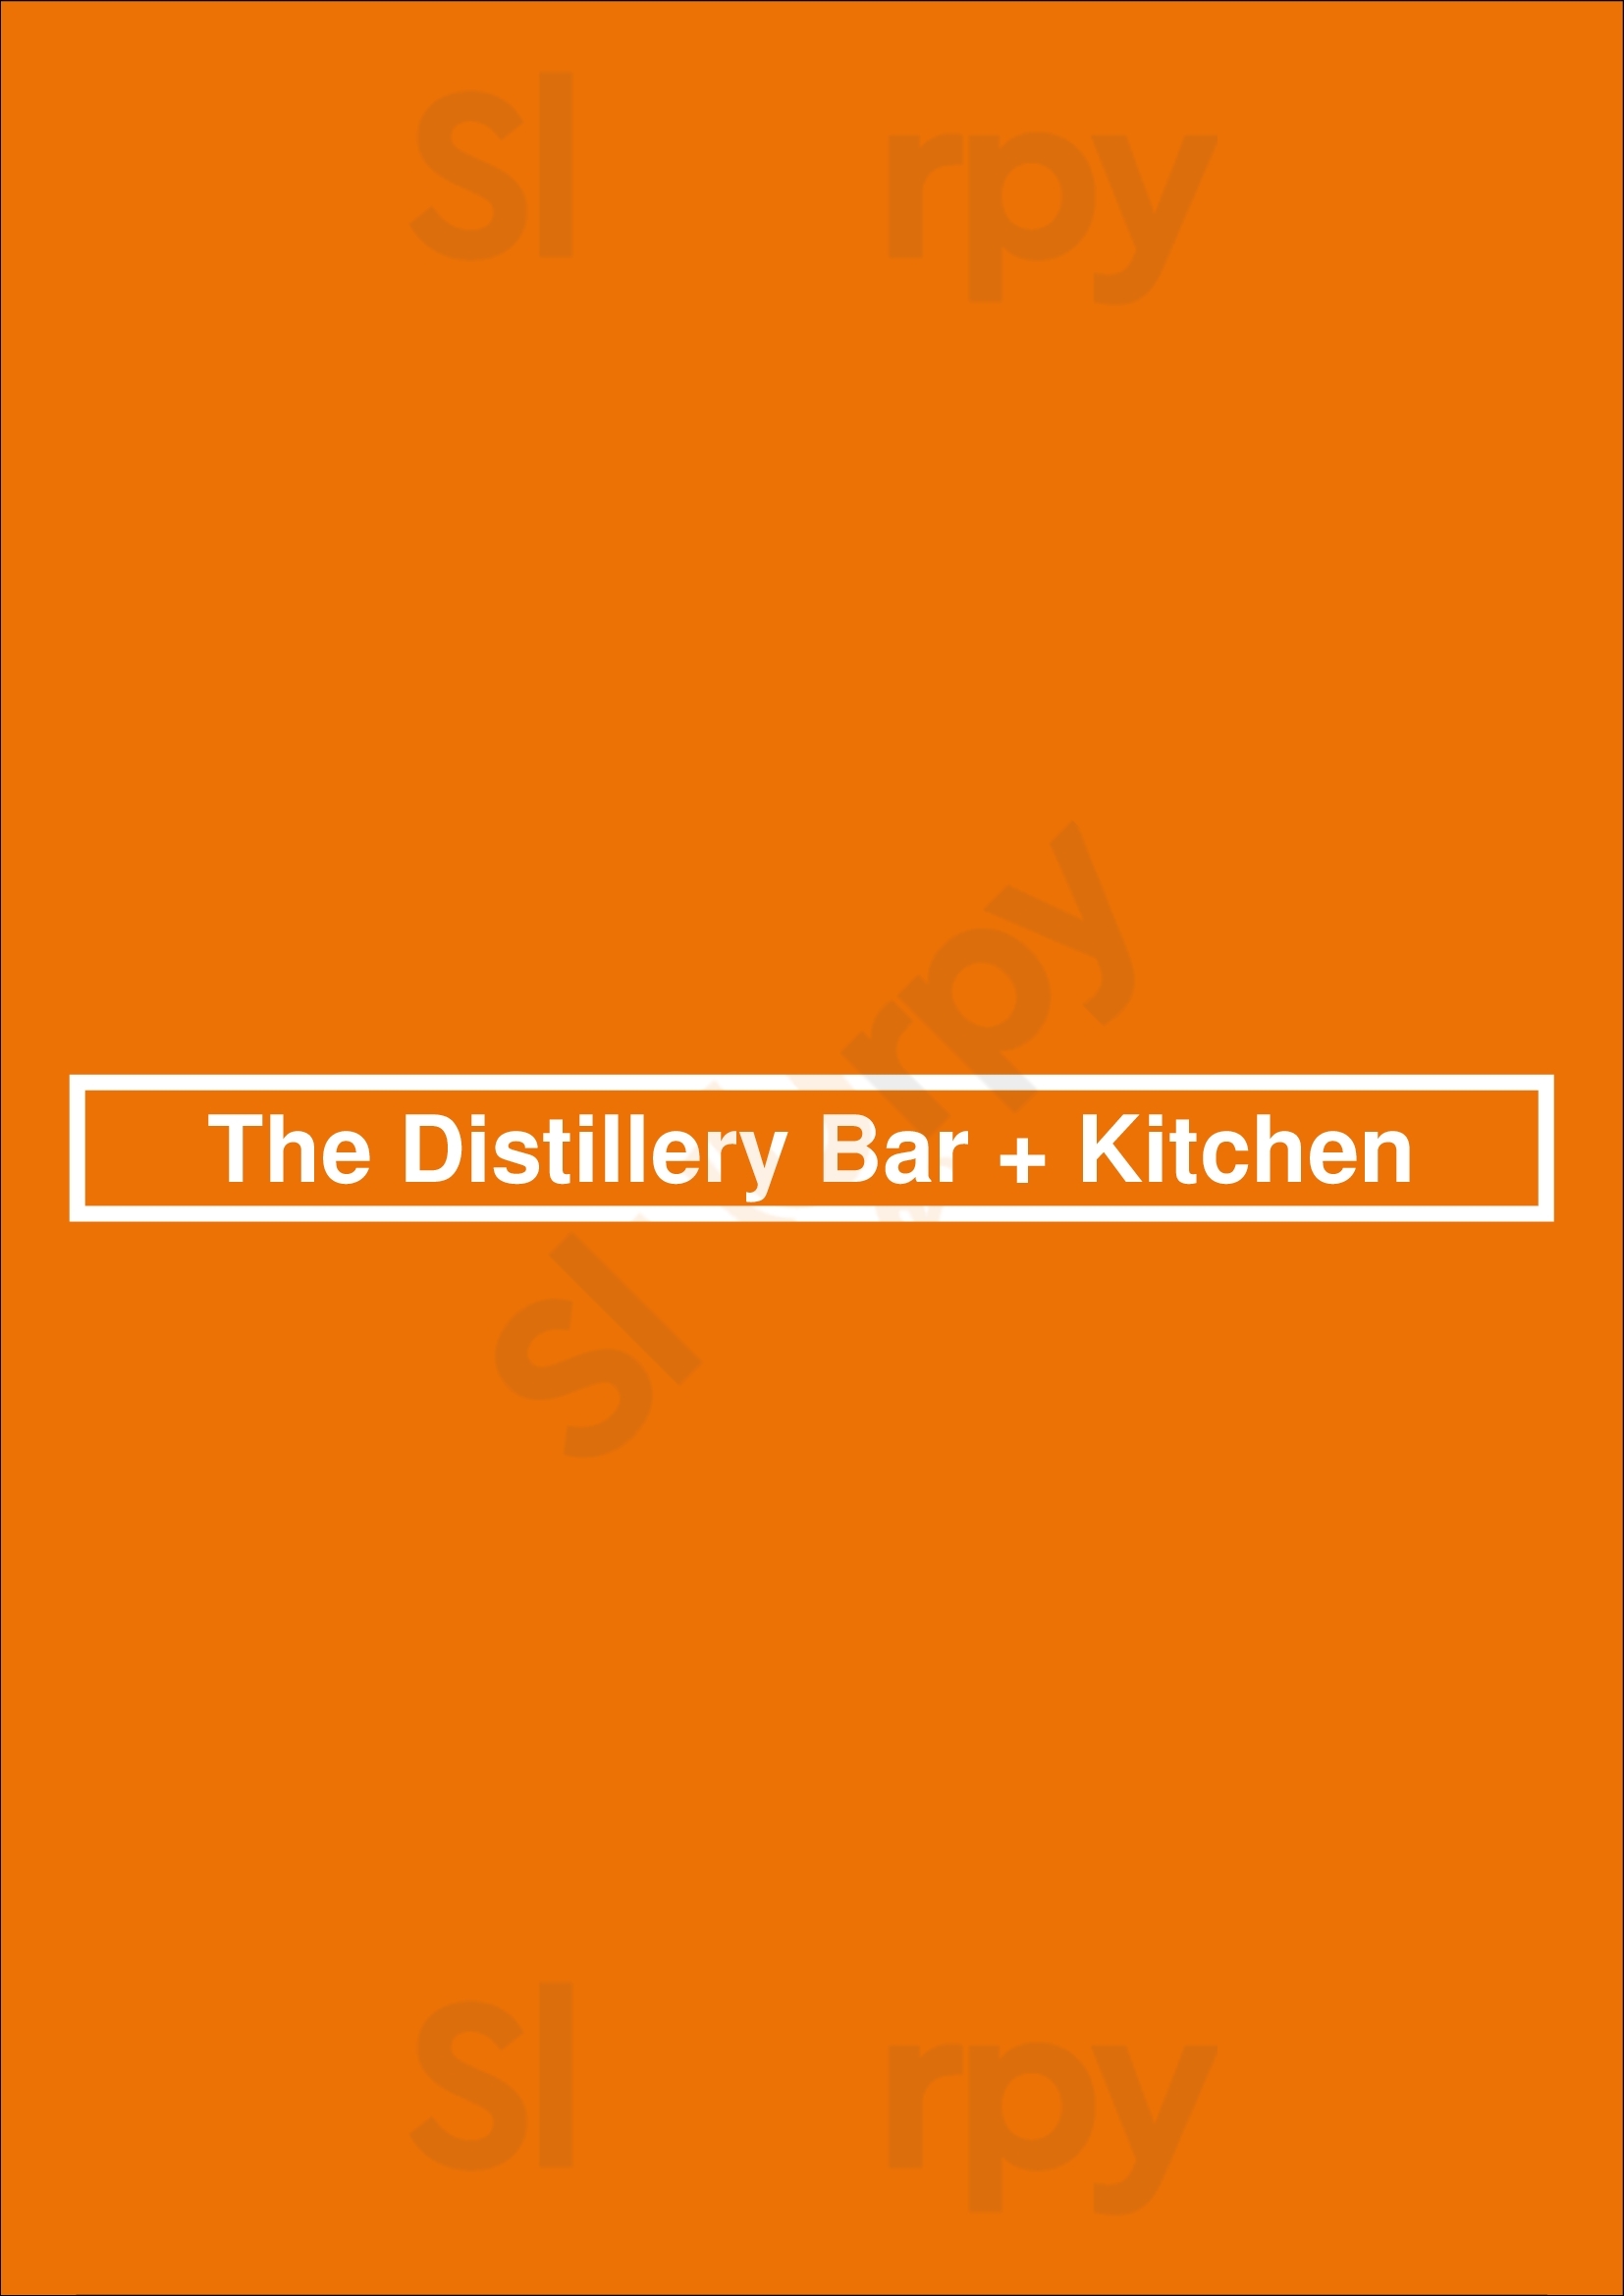 The Distillery Bar + Kitchen Vancouver Menu - 1